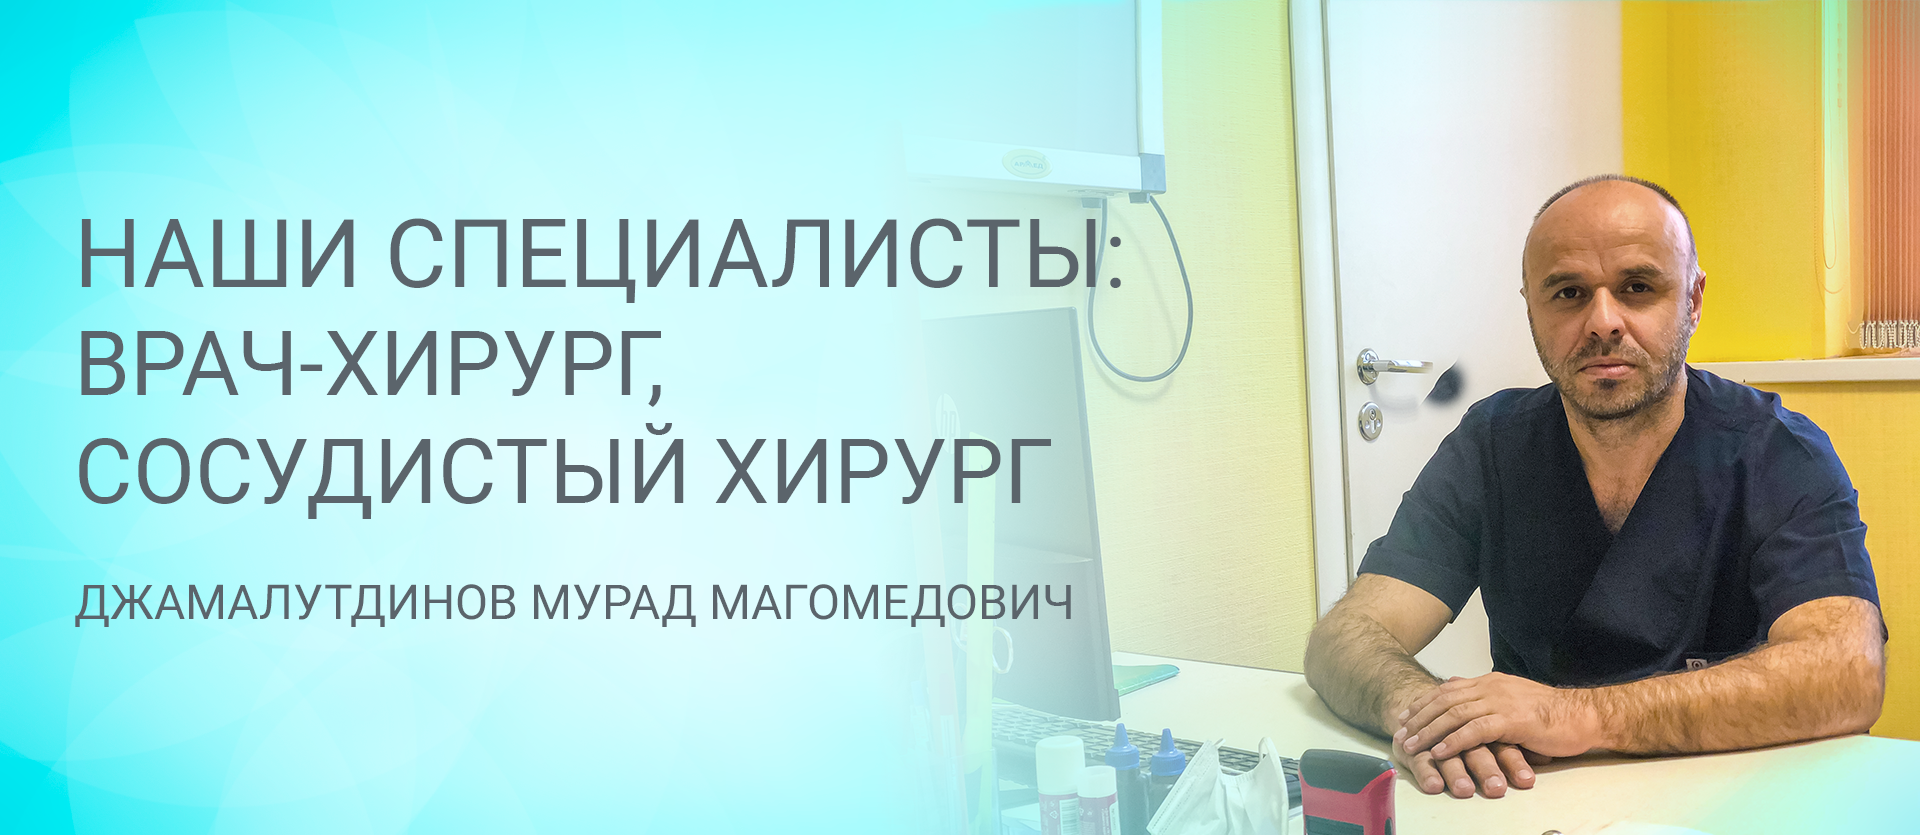 Наши специалисты: Джамалутдинов Мурад Магомедович — врач хирург, флеболог